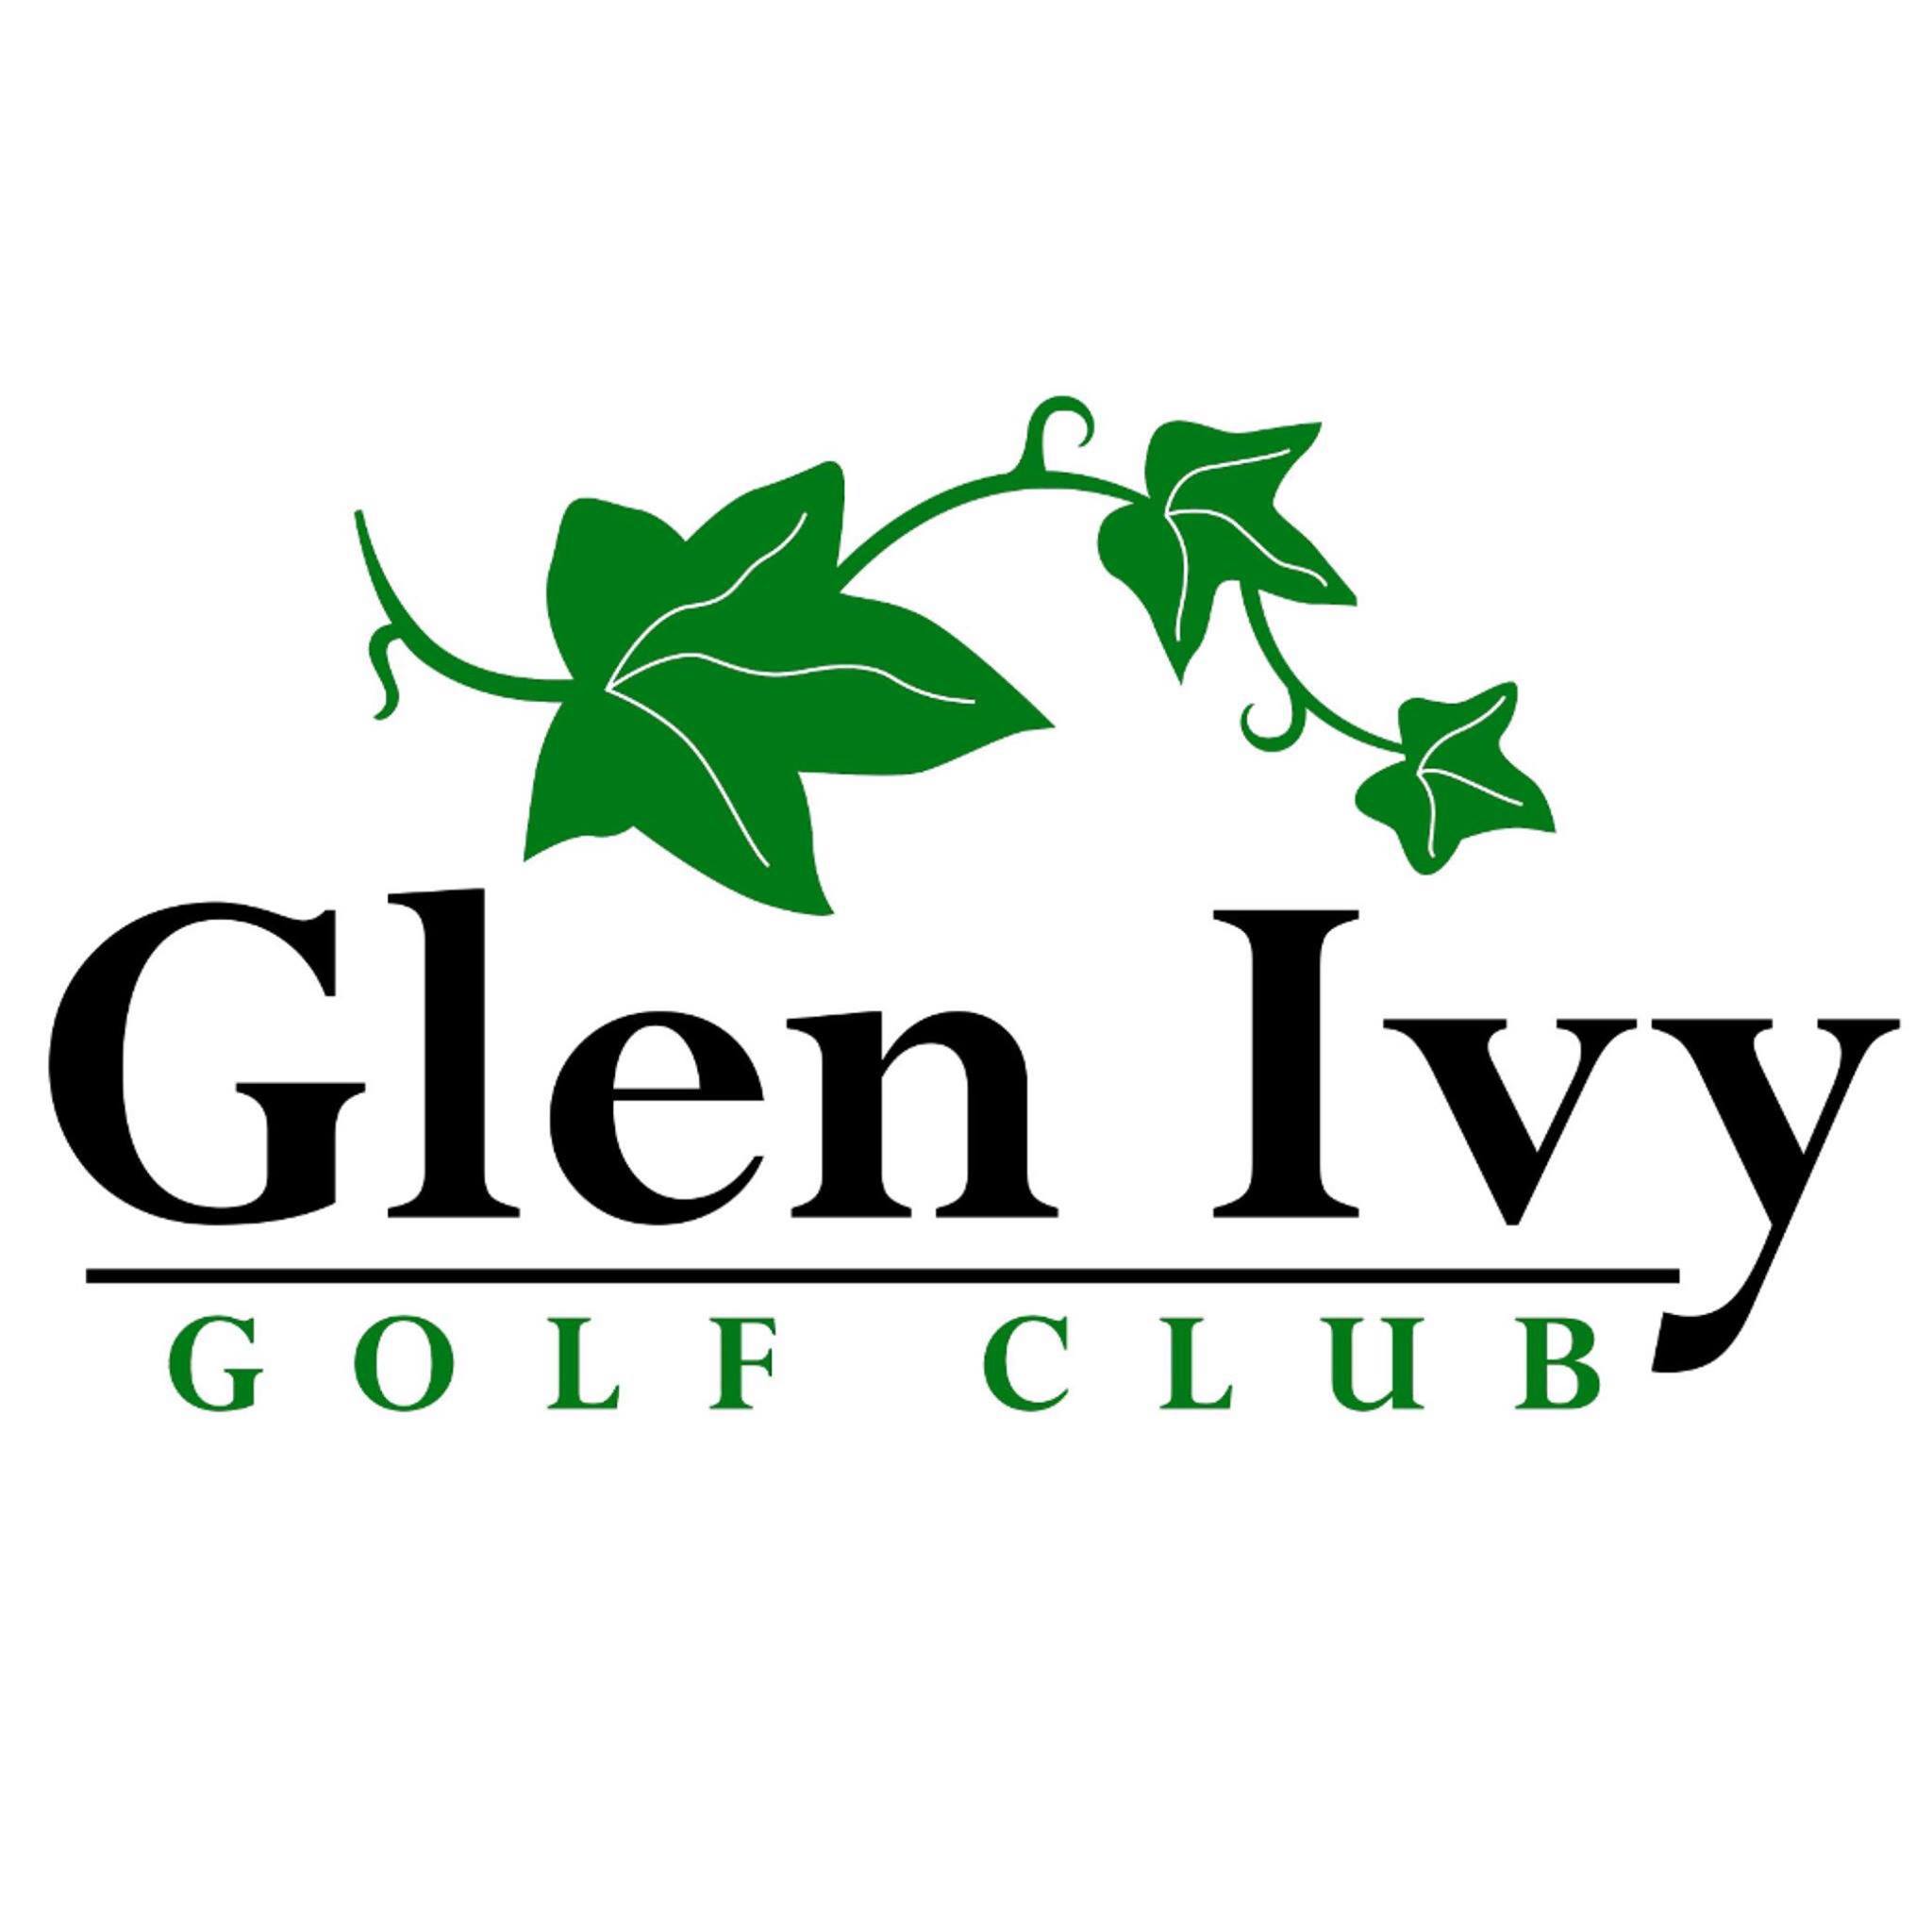 Glen Ivy Golf Club company Logo